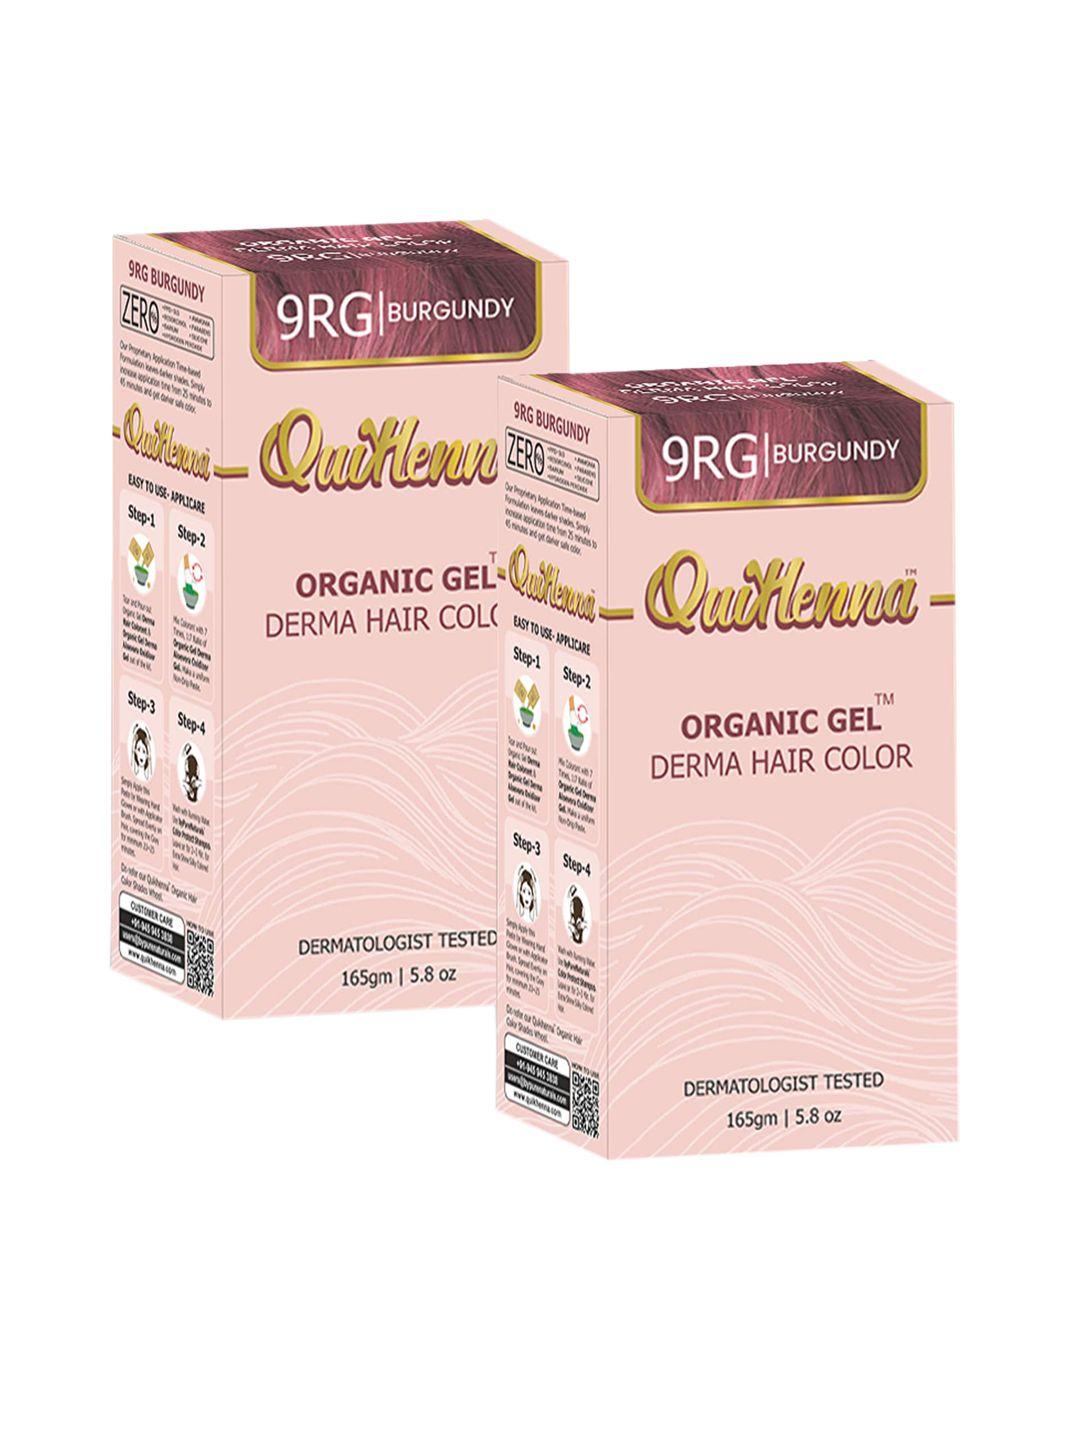 quikhenna set of 2 organic gel derma hair colour kit- 165gm each - burgundy 9rg